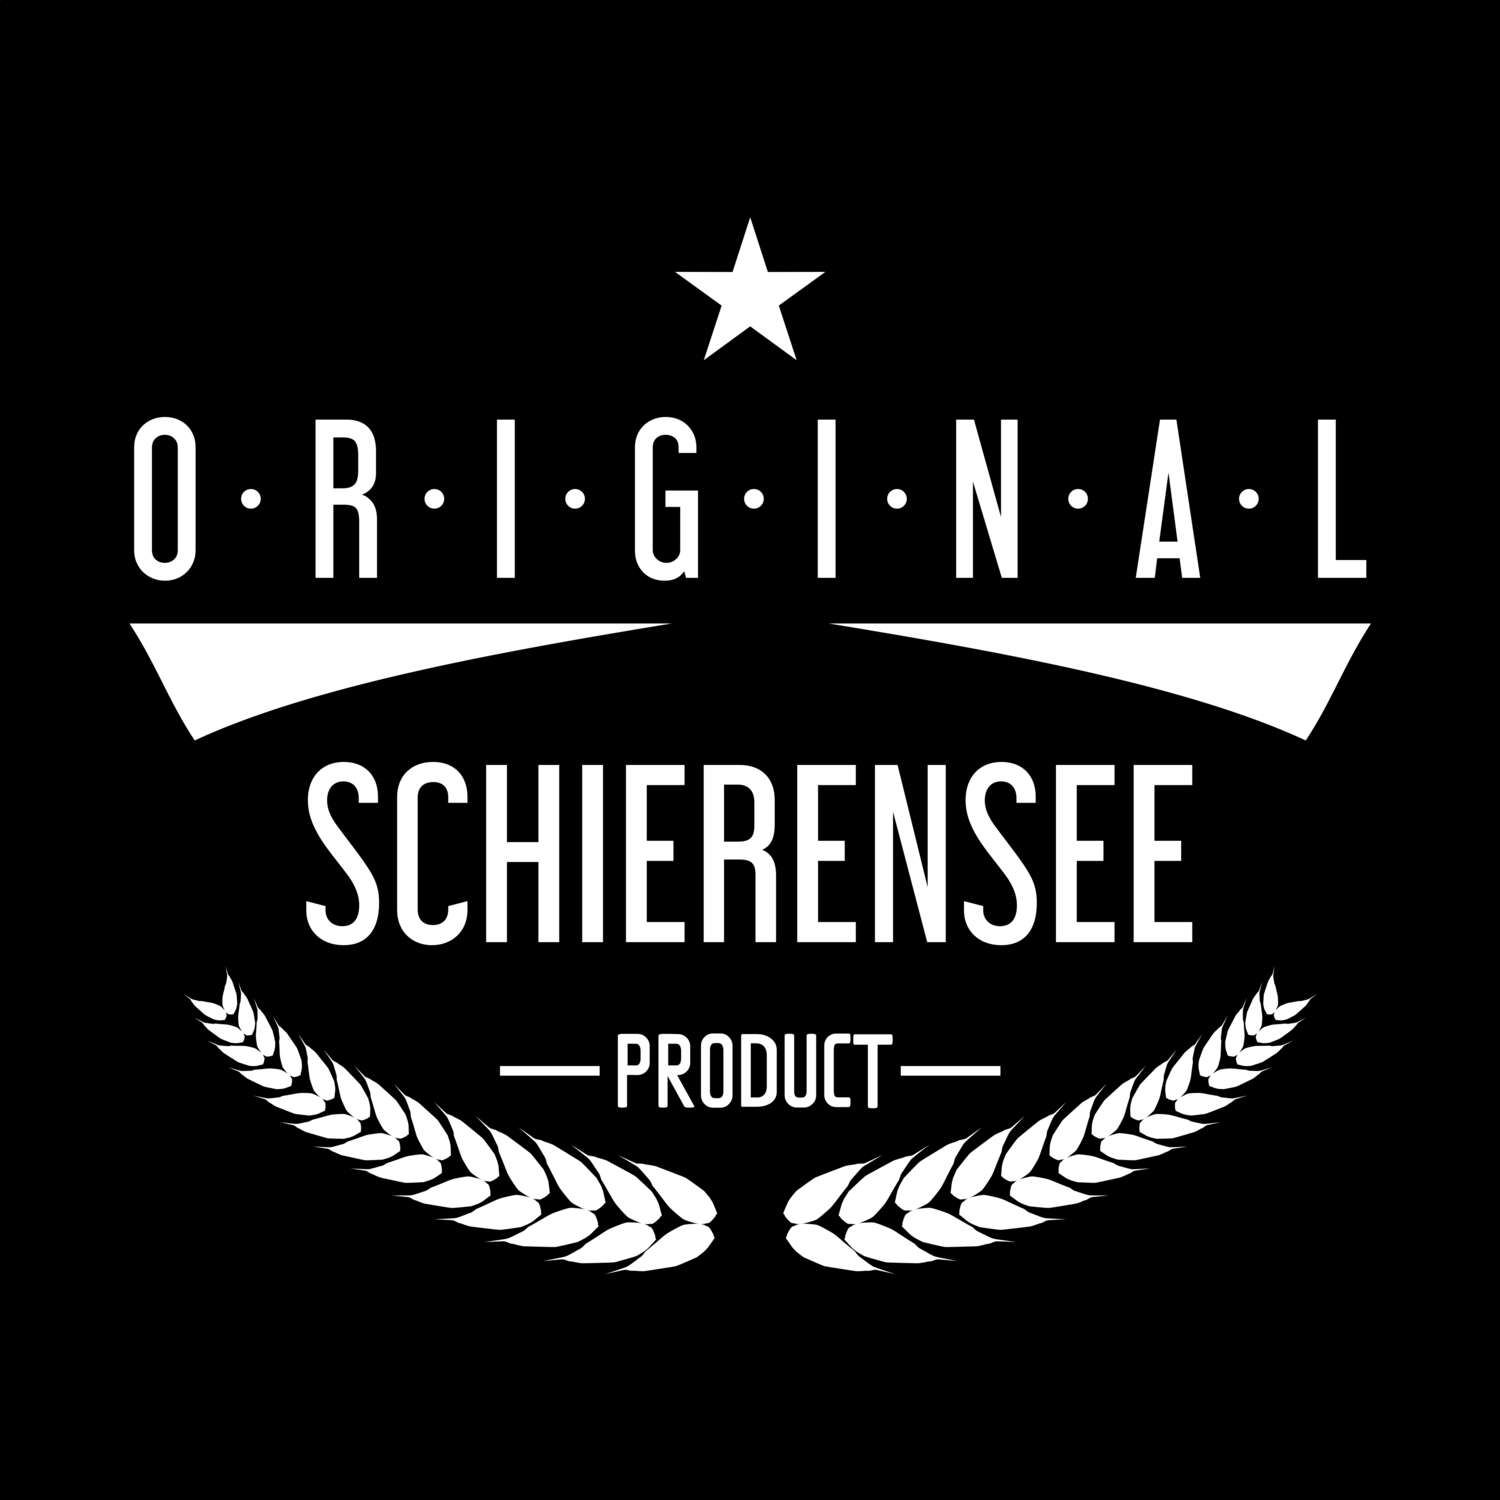 Schierensee T-Shirt »Original Product«